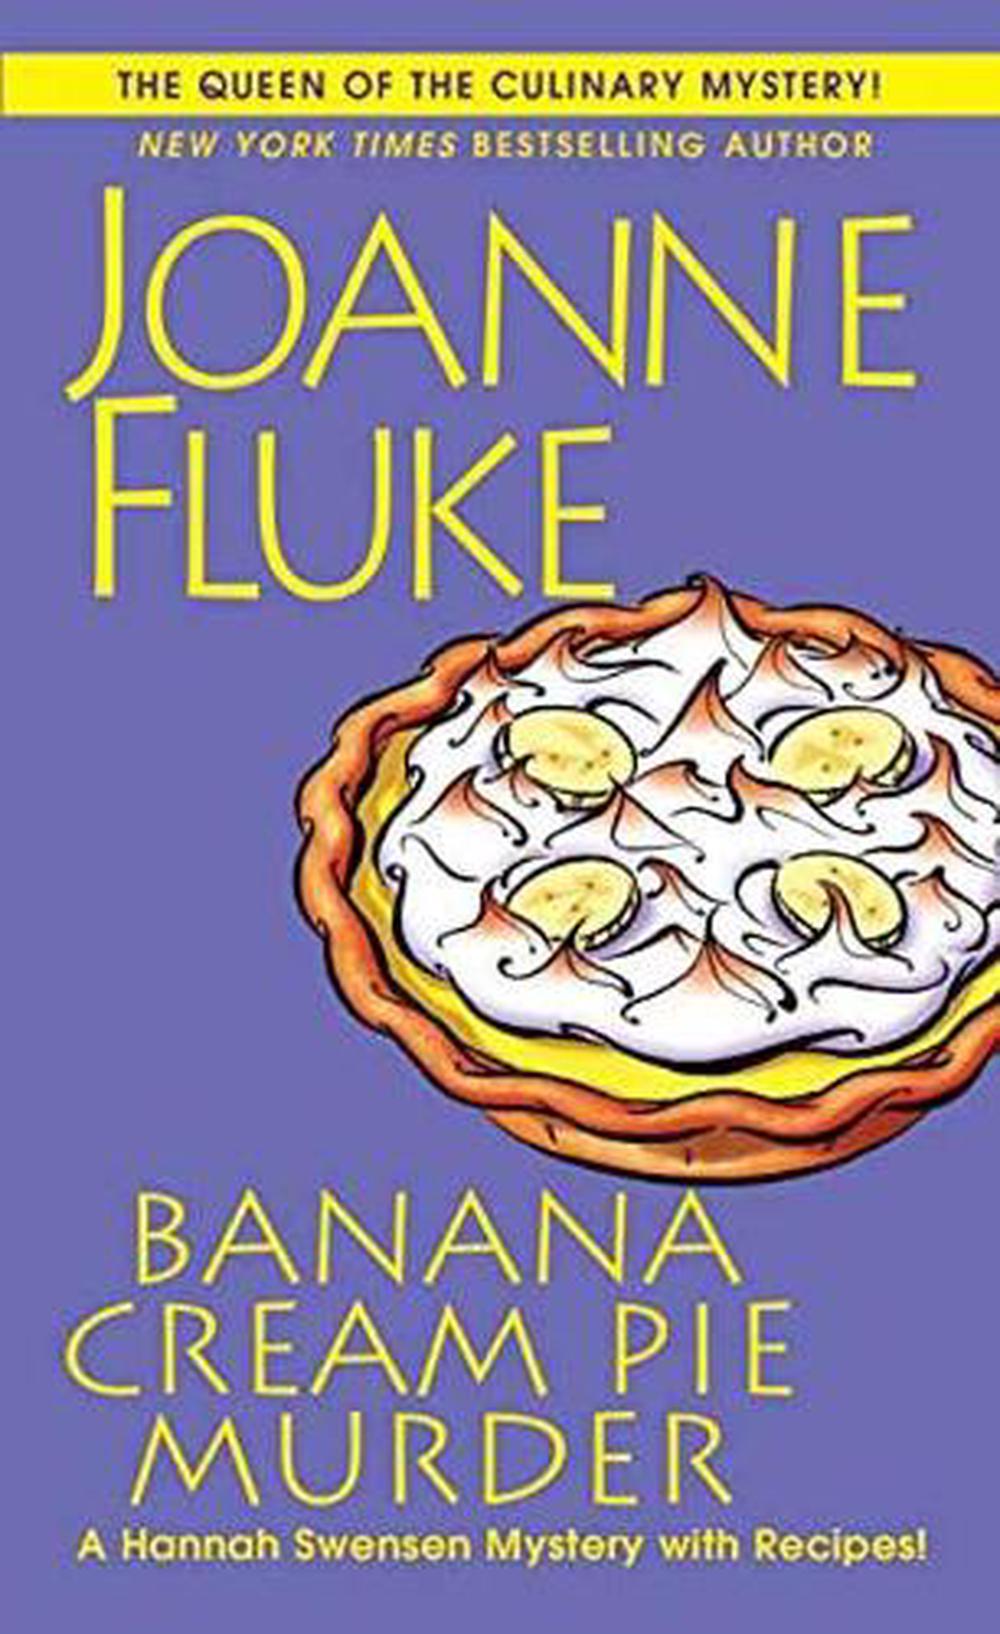 Cream Puff Murder by Joanne Fluke